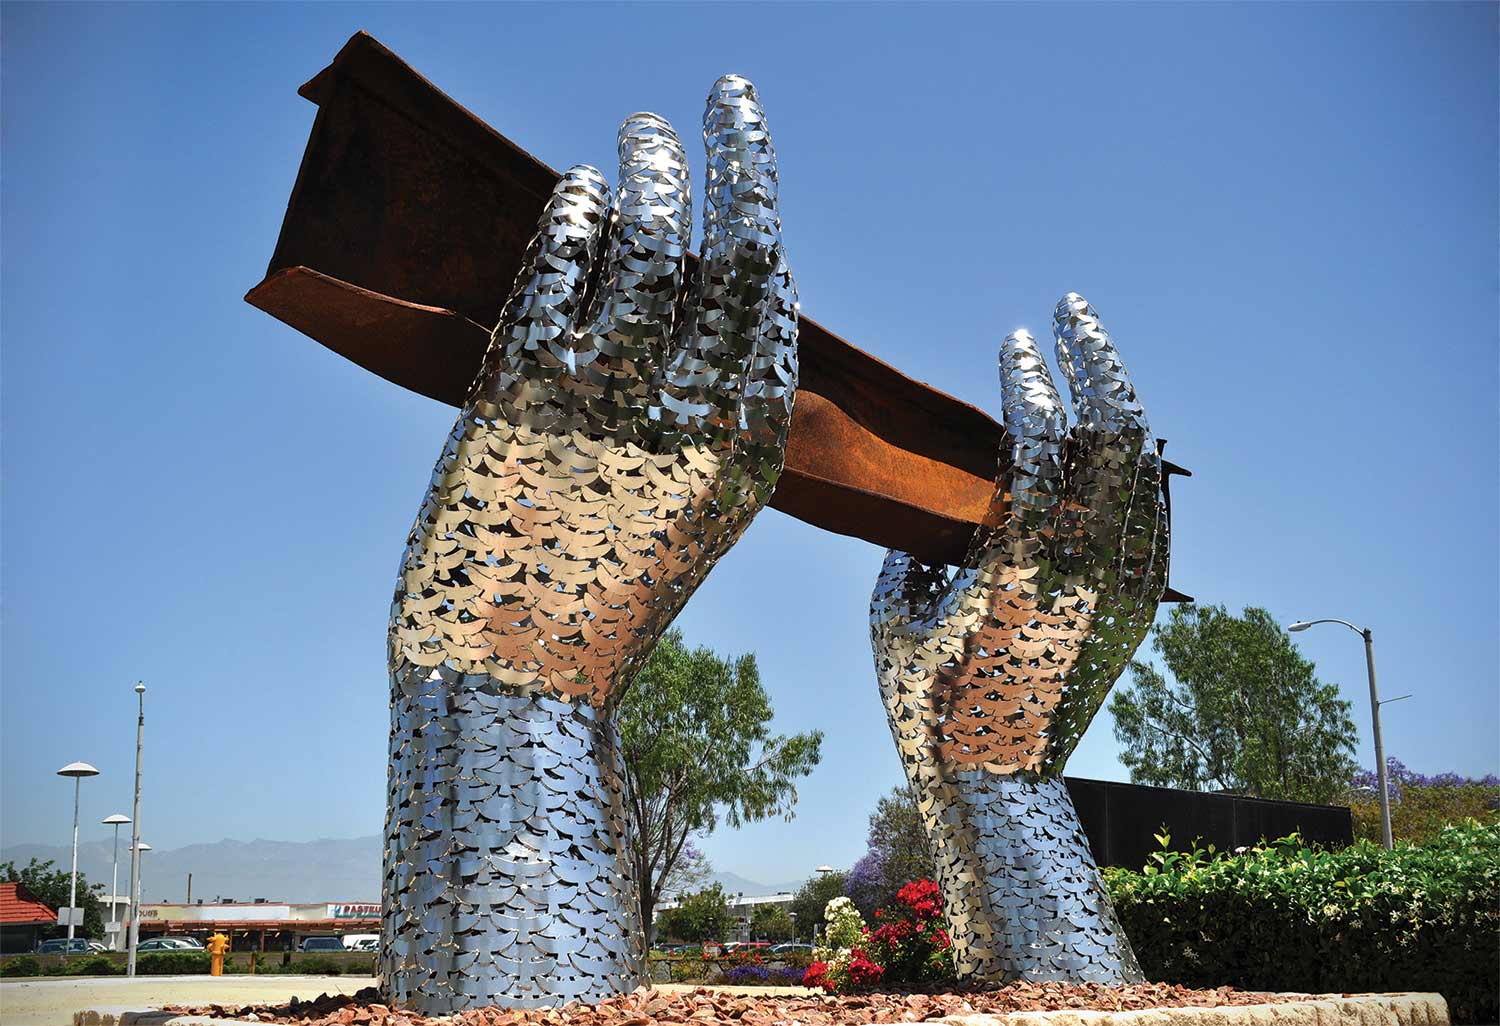 9/11 memorial sculpture from artist Heath Satow